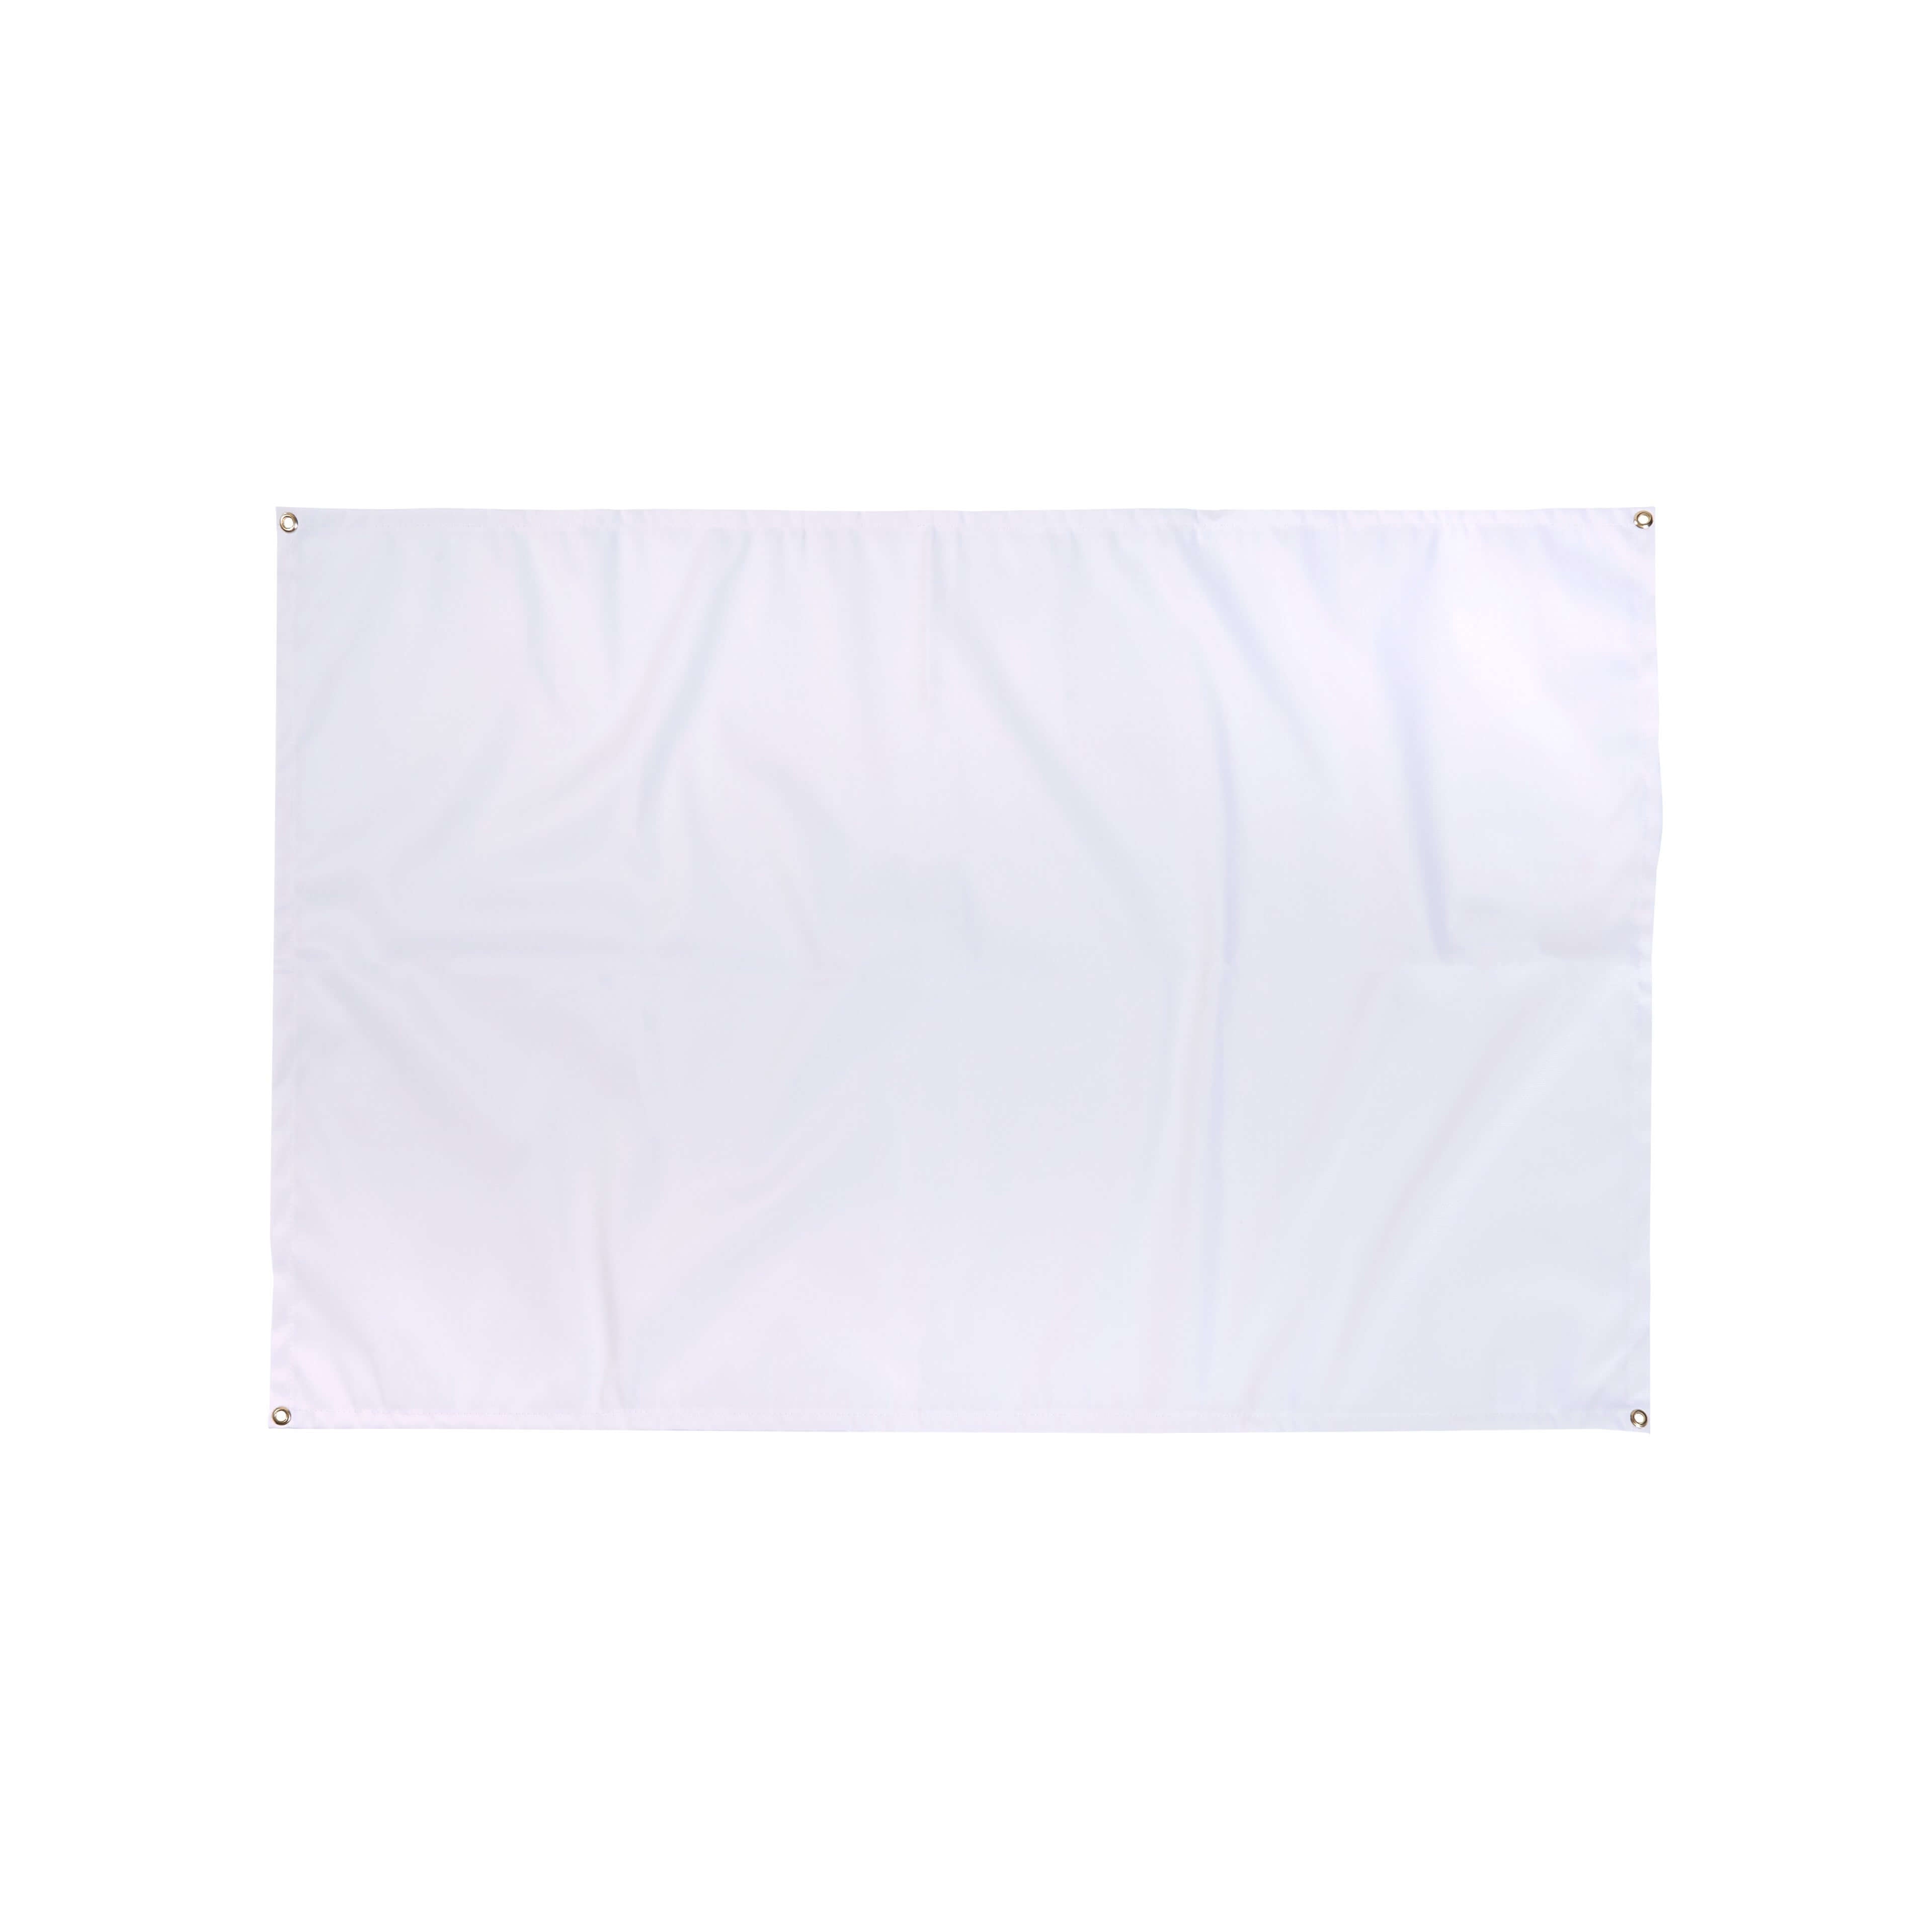 Blank fabric banner | Dropshippers UK No Minimum Order